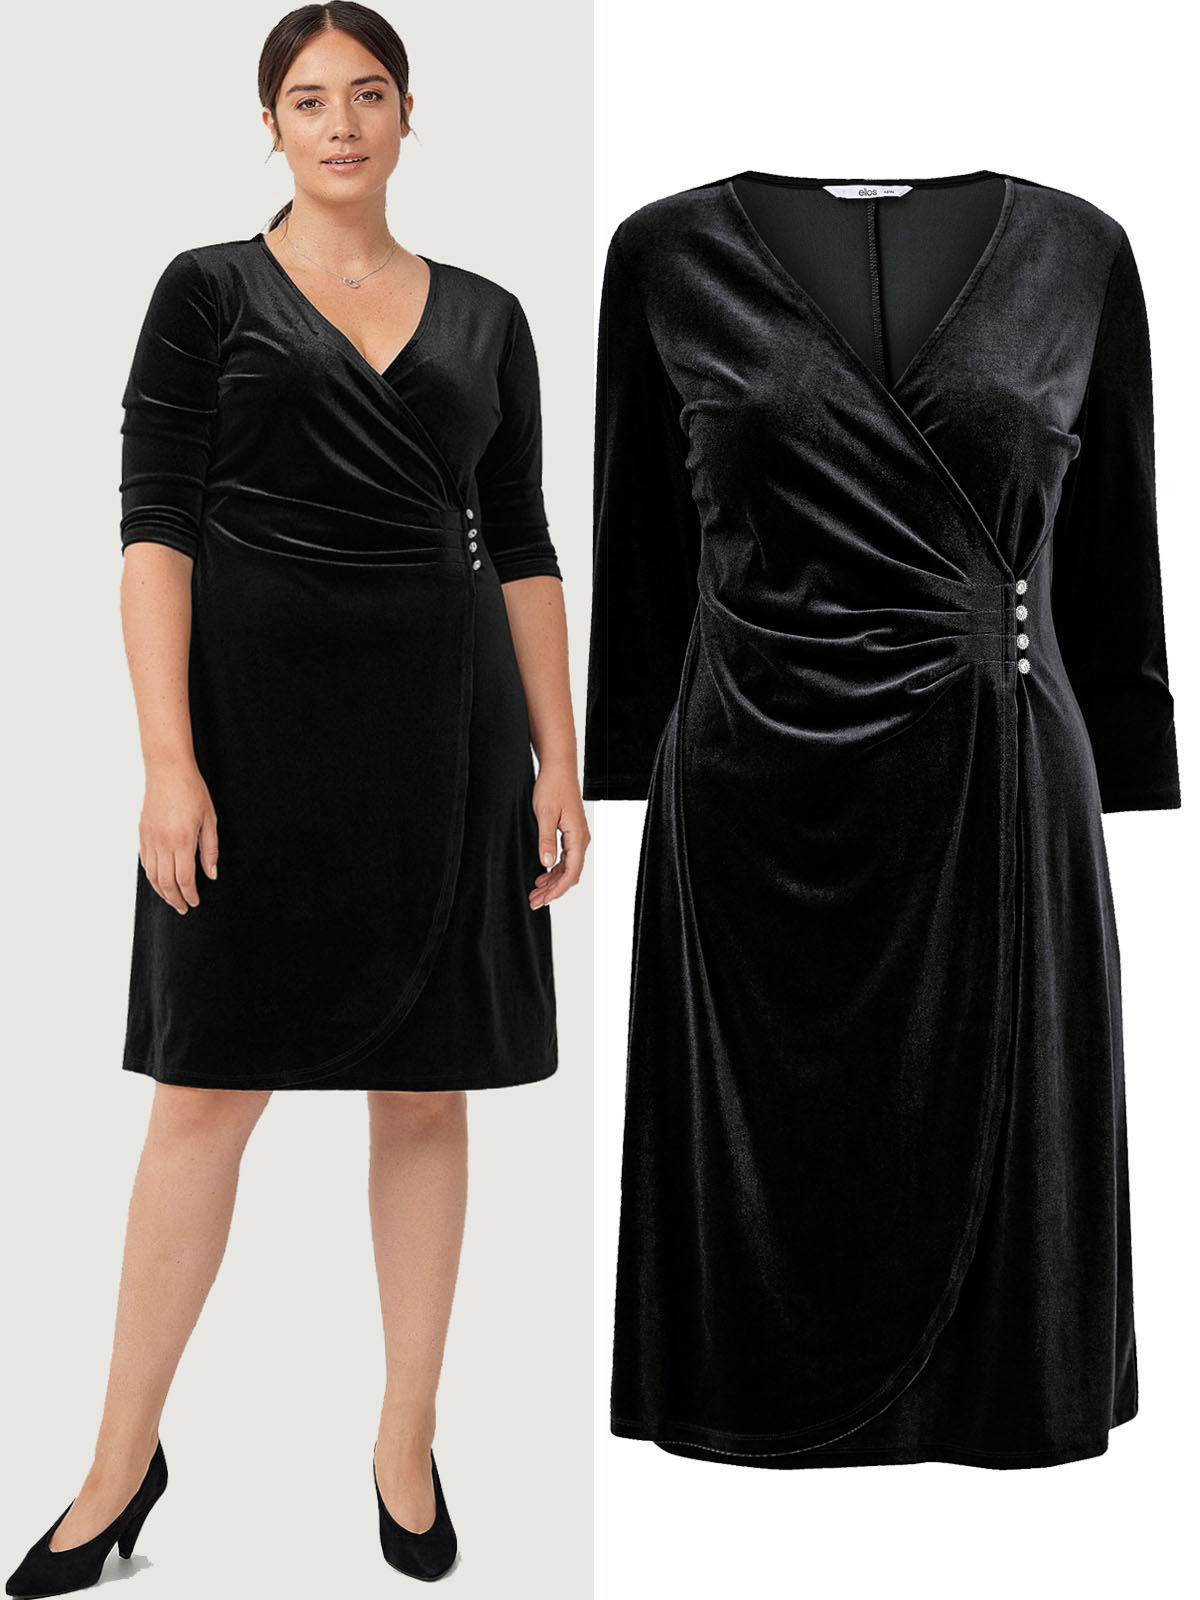 Ellos - - Ellos BLACK Velvet Wrap Dress - Plus Size 24/26 to 32/34 (EU ...